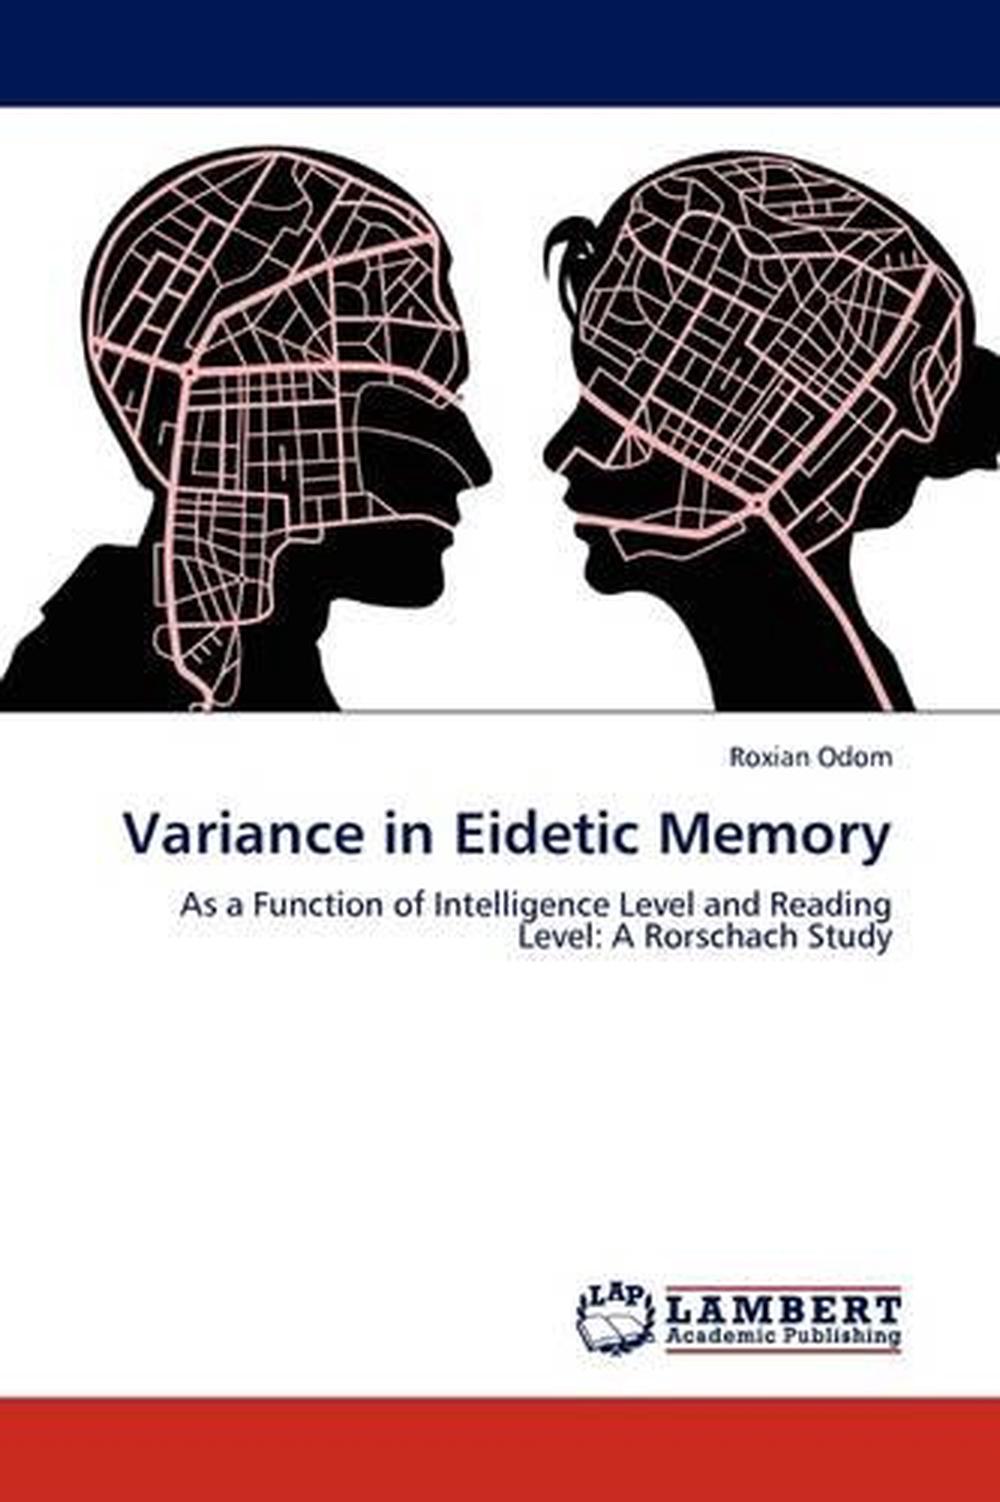 eidetic memory vs photographic memory